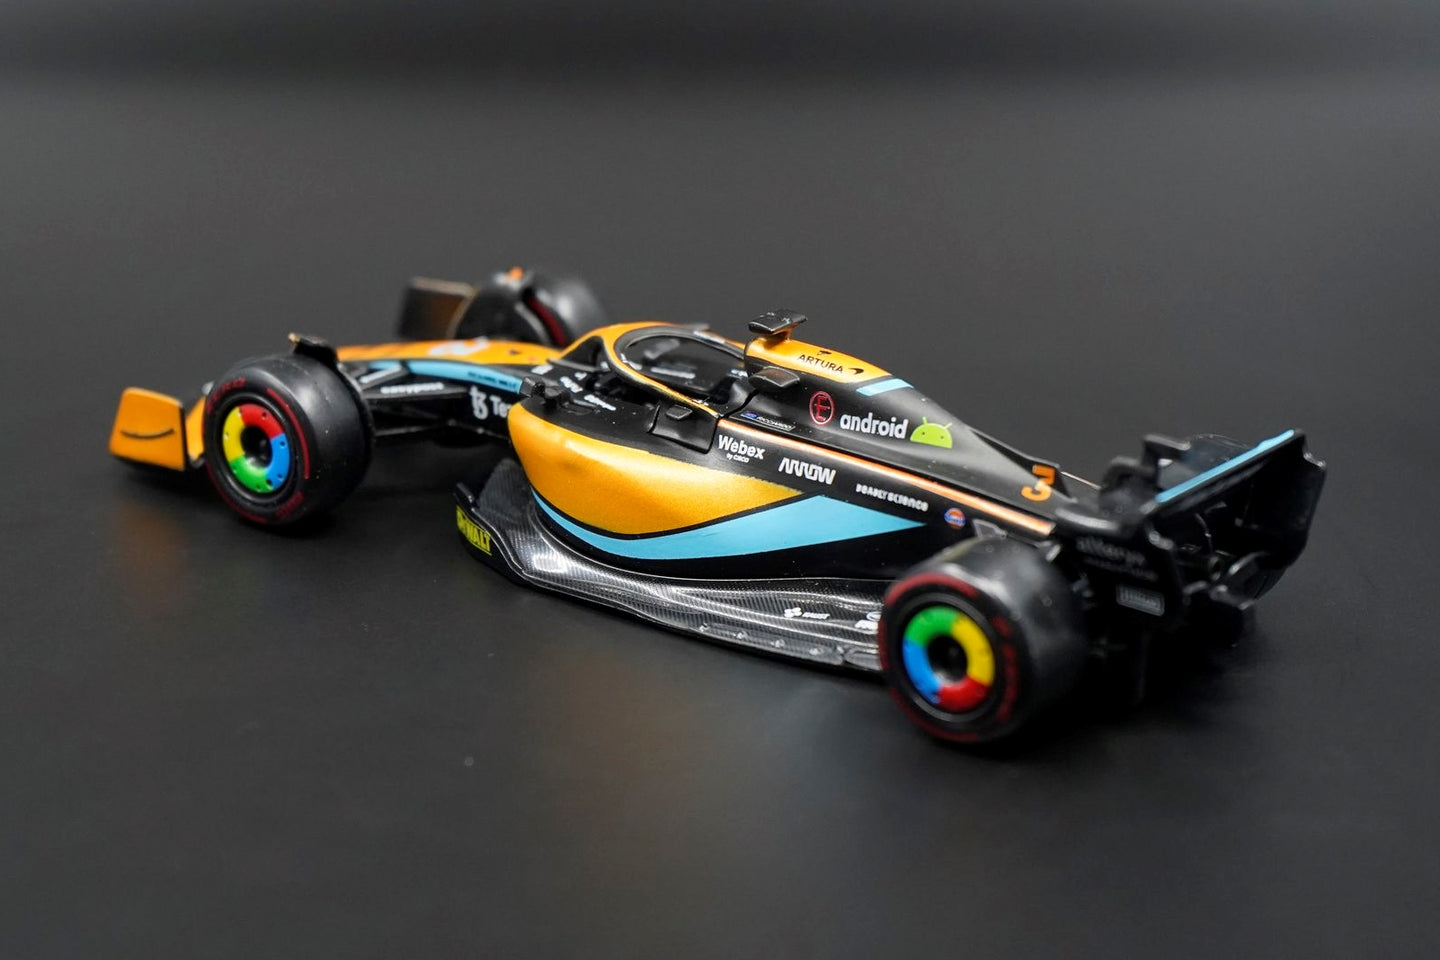 2022 McLaren MCL36 #3 Daniel Ricciardo F1 Formula Diecast Race Car Model 1:43 by Bburago